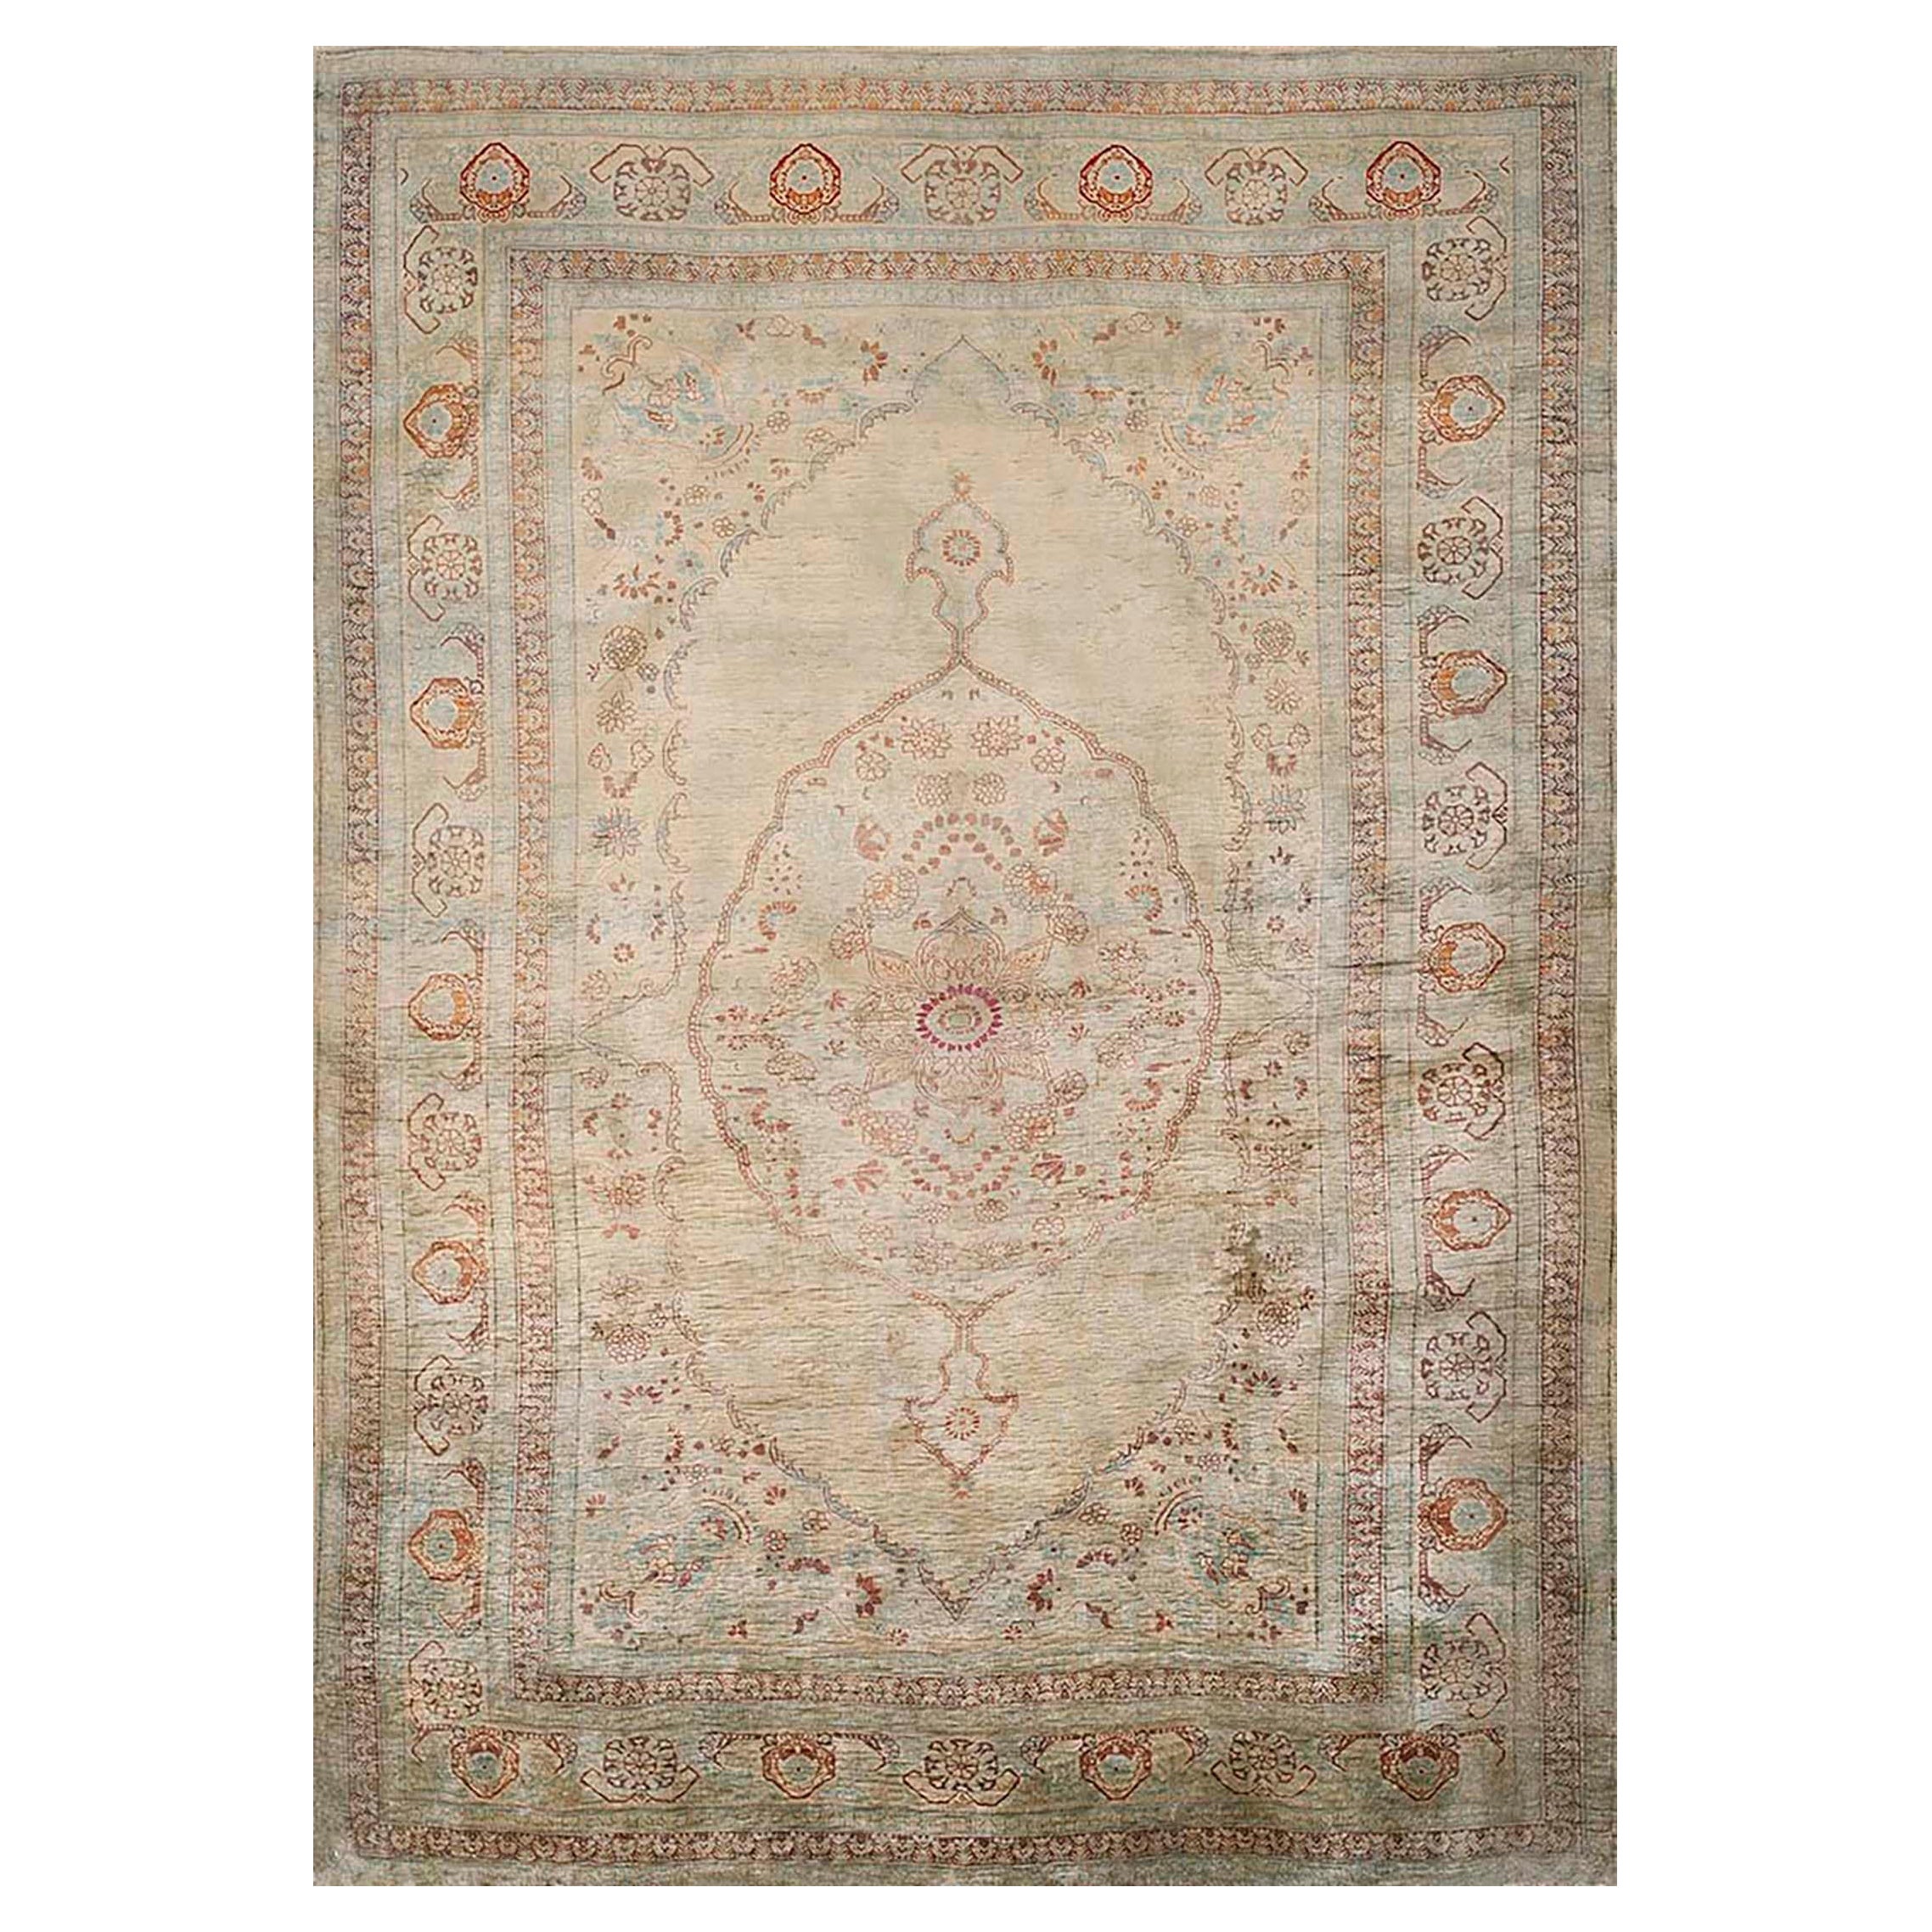 19th Century Persian Silk Tabriz Carpet  19th Century Persian Silk Tabriz Carpet For Sale